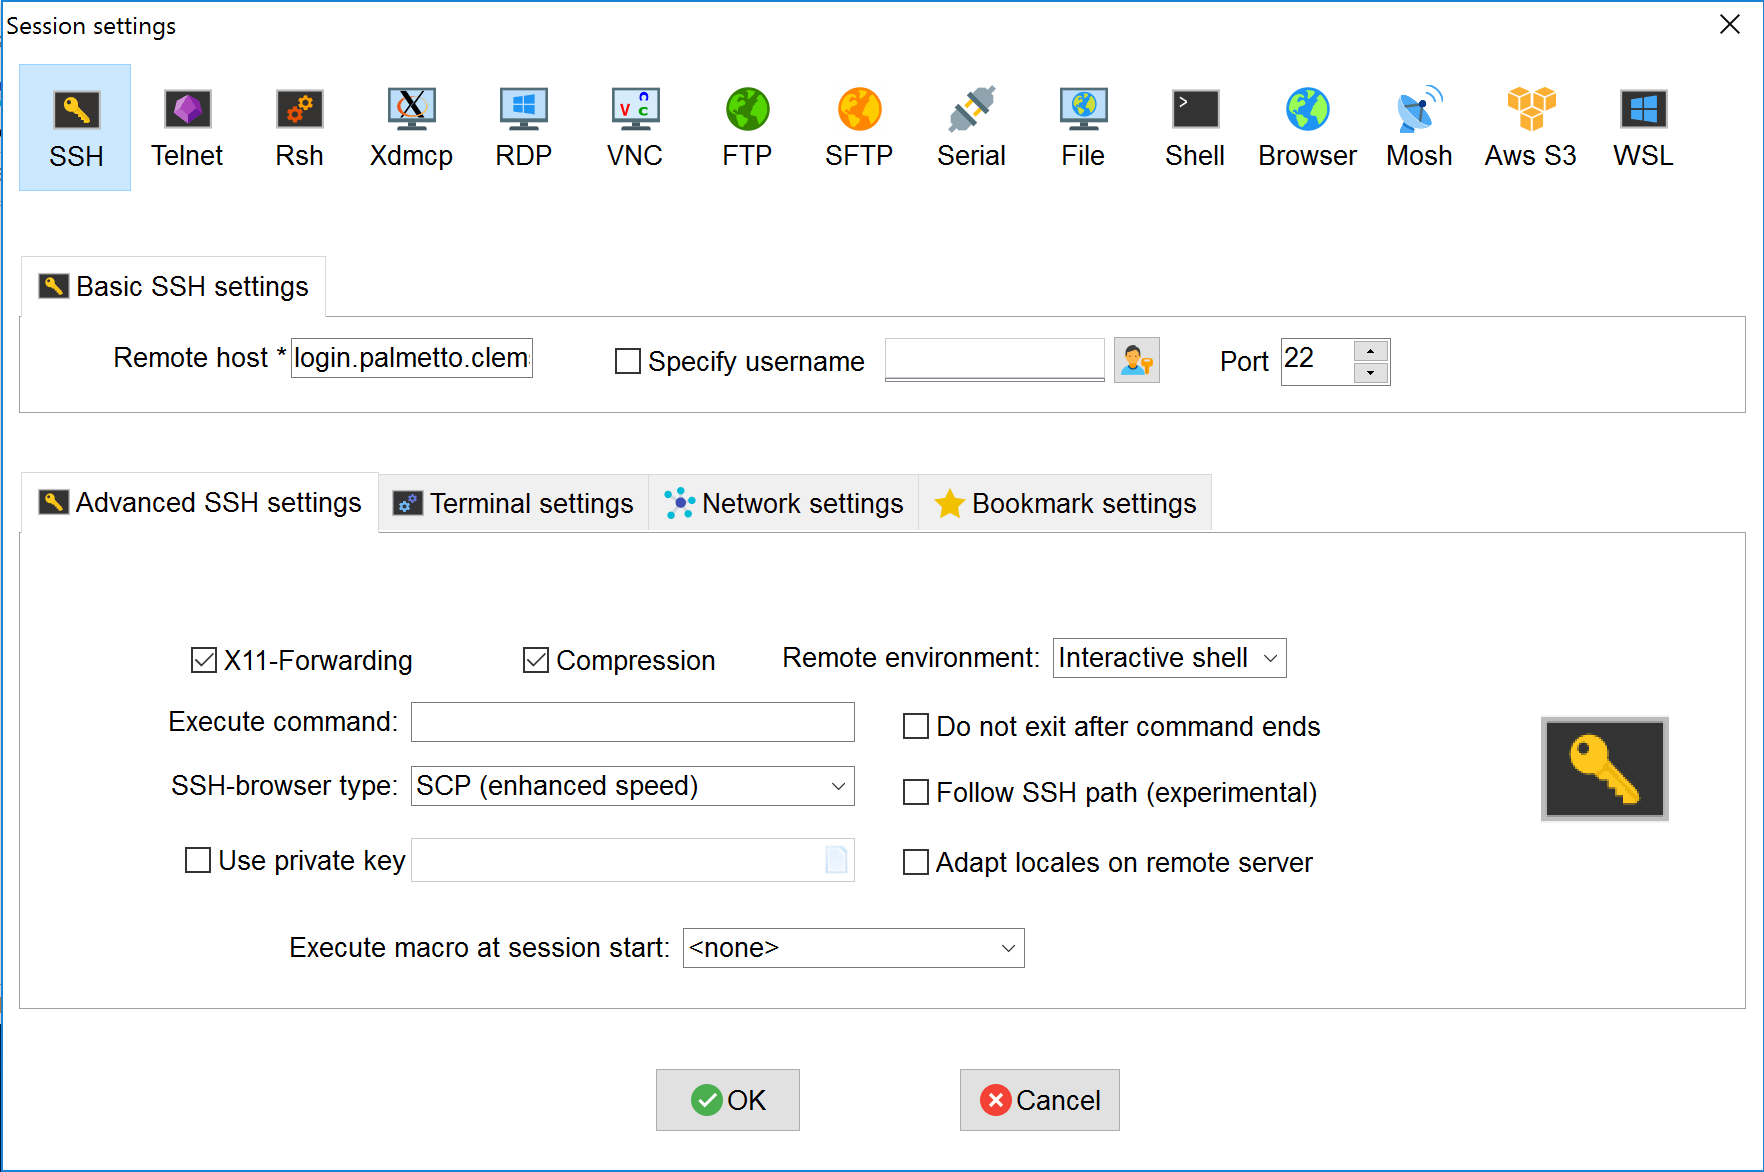 Screenshot of the MobaXterm program session settings.